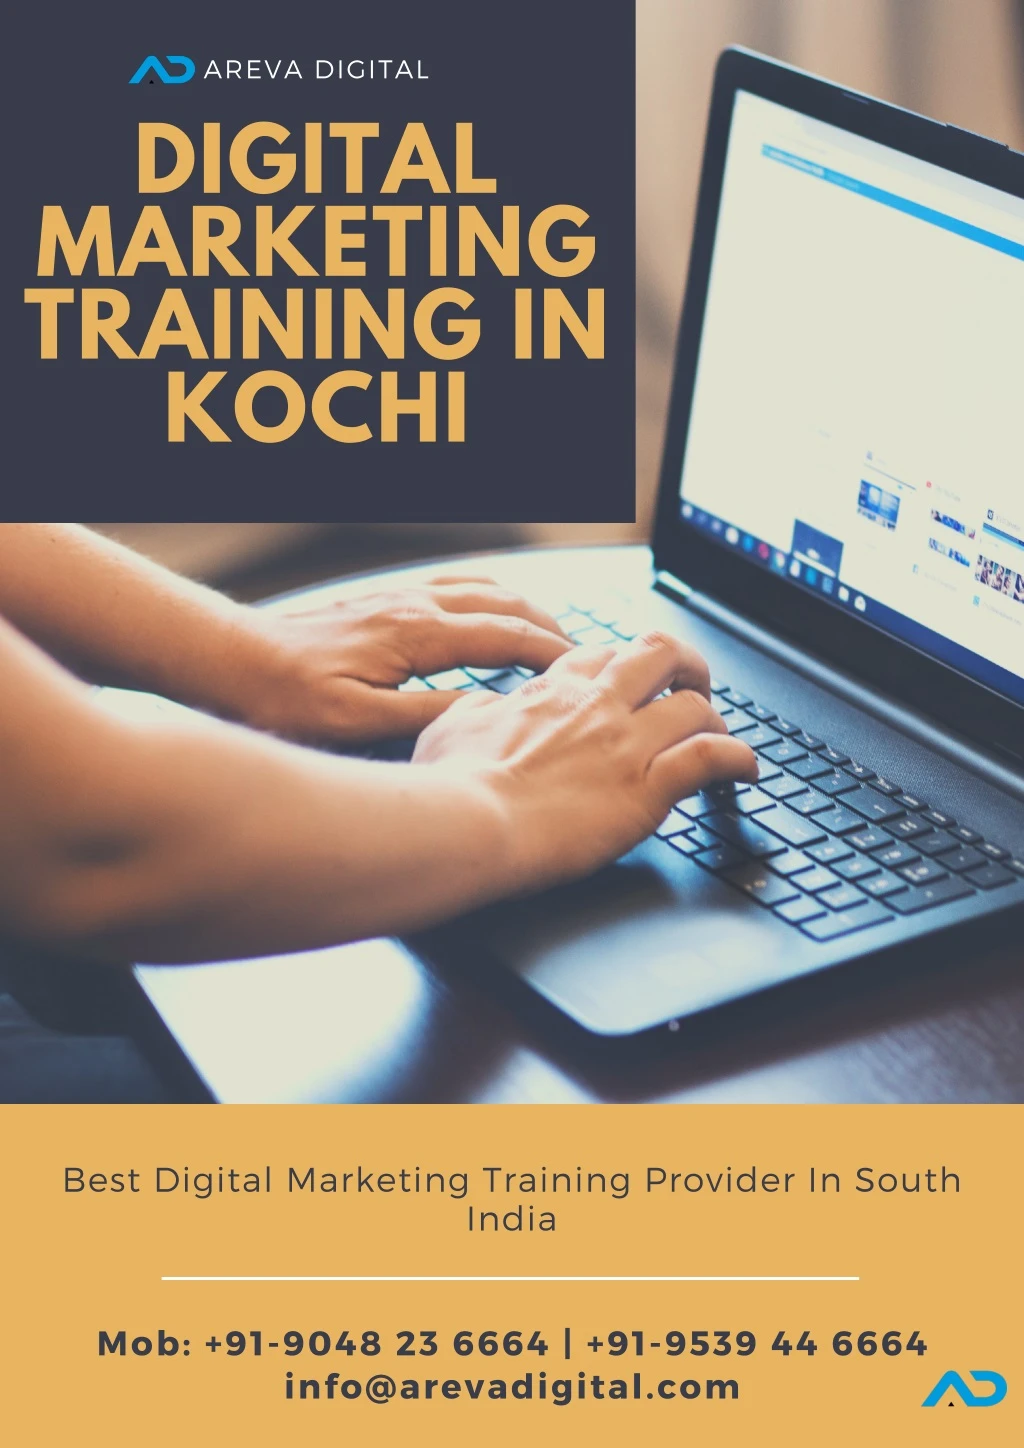 areva digital digital marketing training in kochi